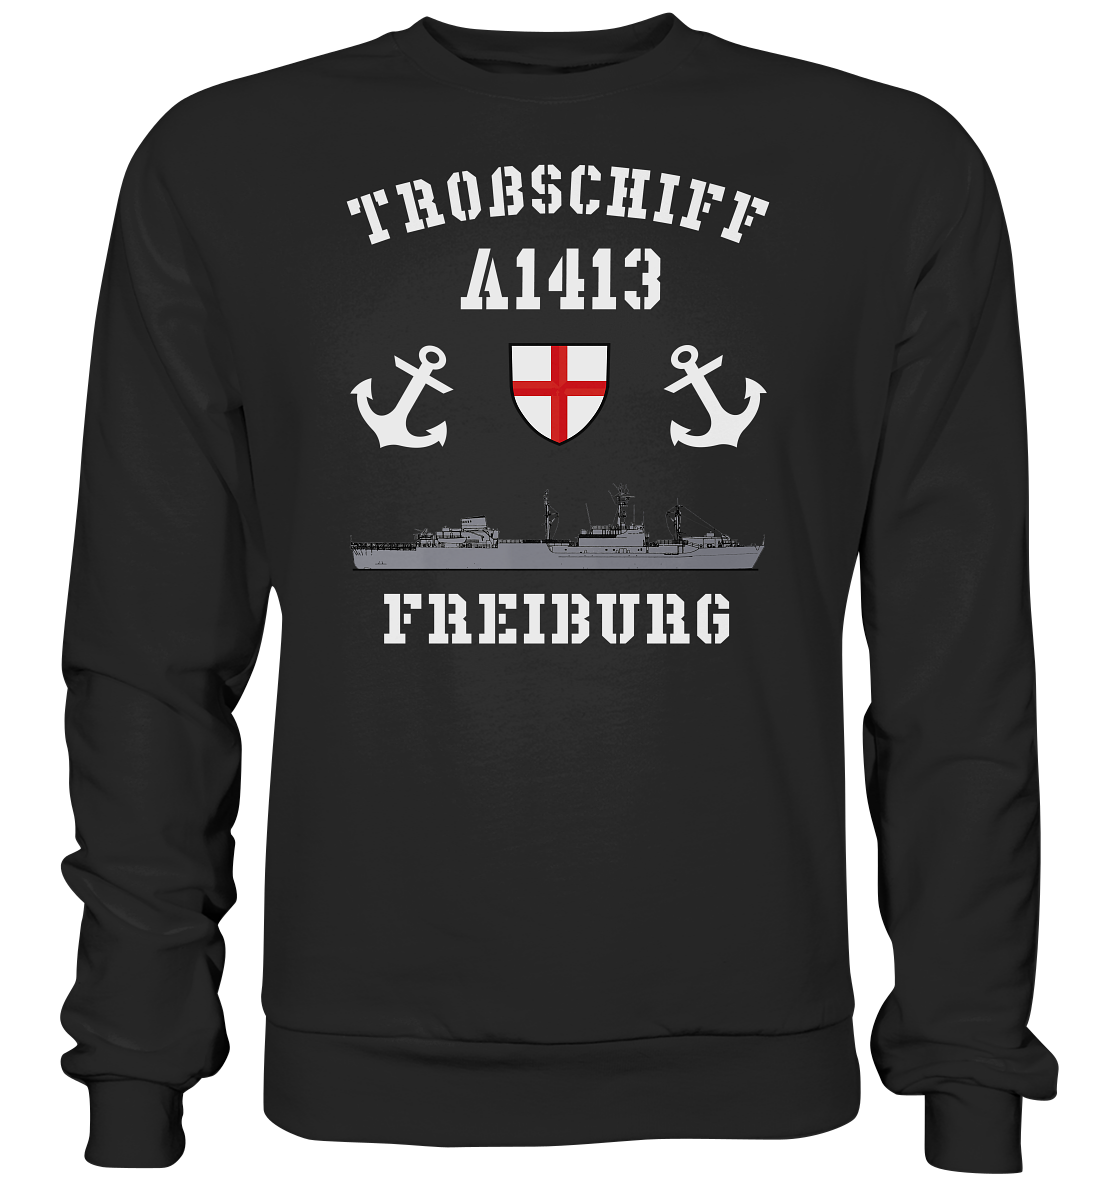 Troßschiff A1413 FREIBURG nach Umbau - Premium Sweatshirt